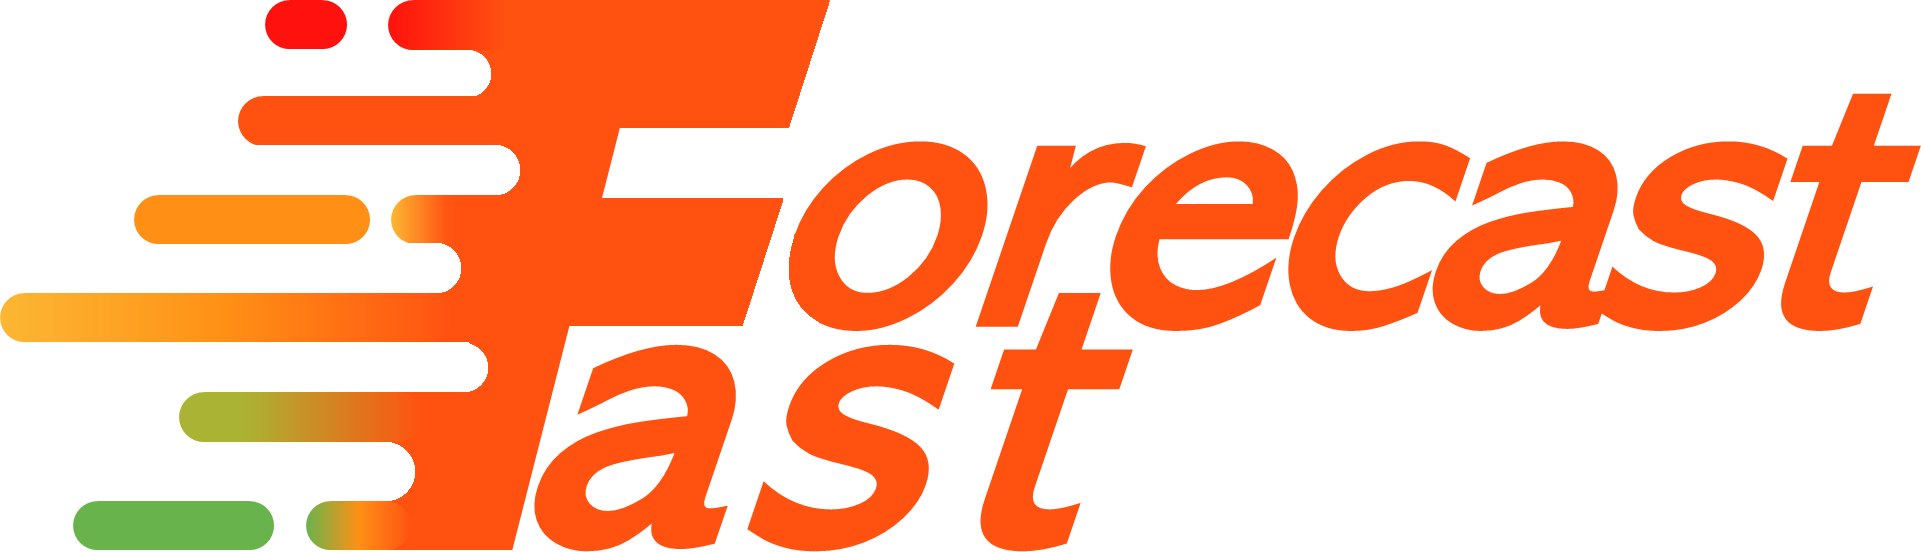 Forecast Fast logo